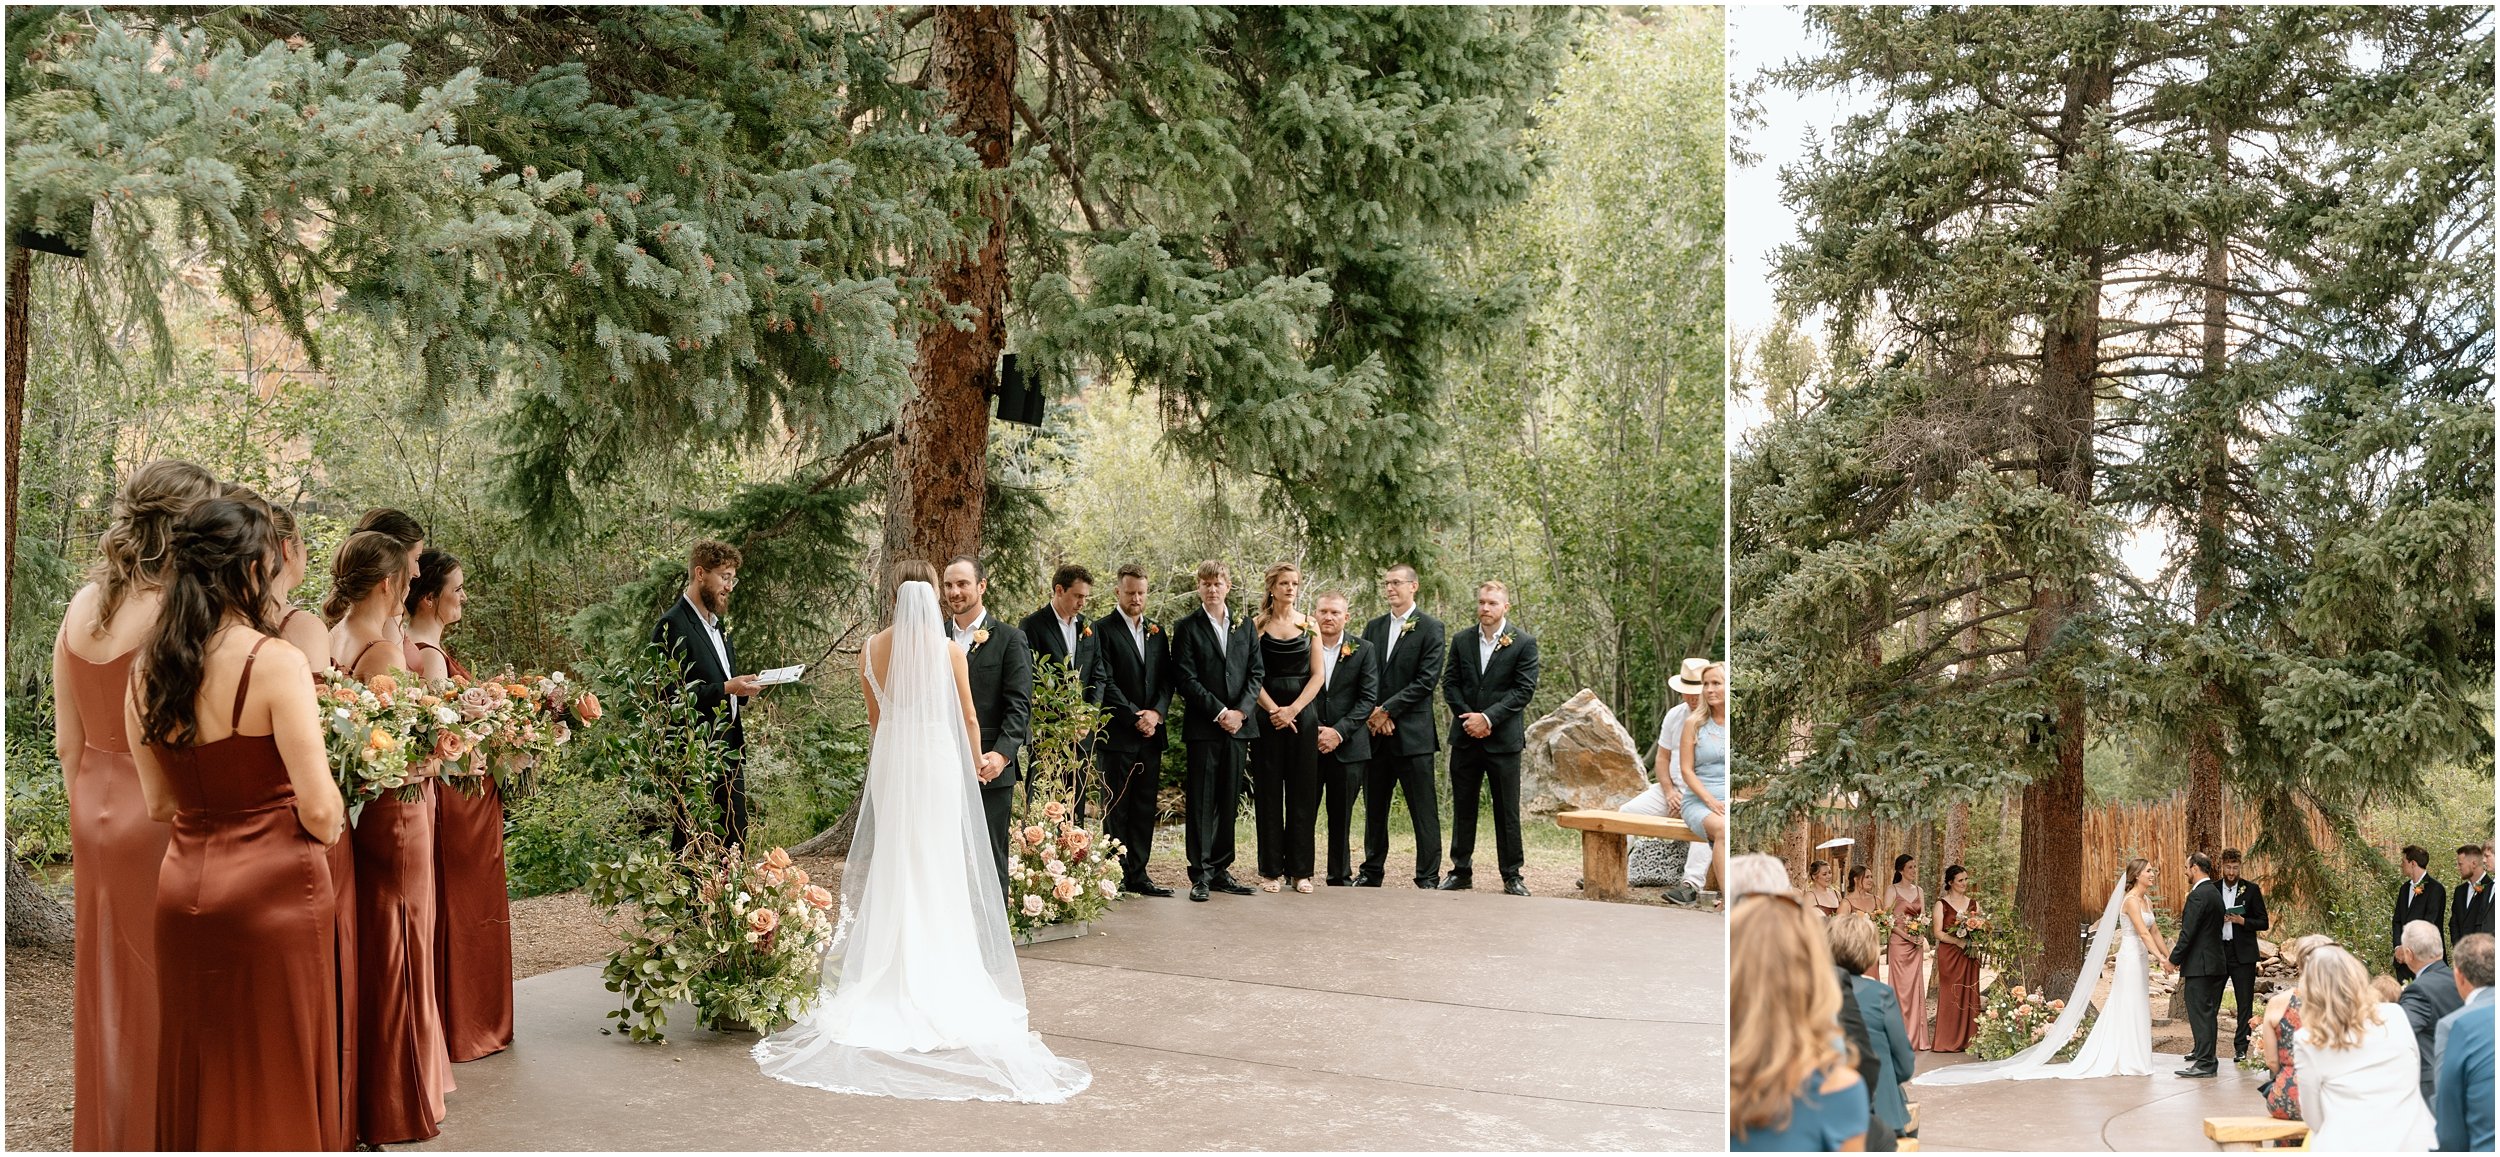 Mado Photo - Blacktone Rivers Ranch Idaho Springs Colorado Wedding Photography_0032.jpg